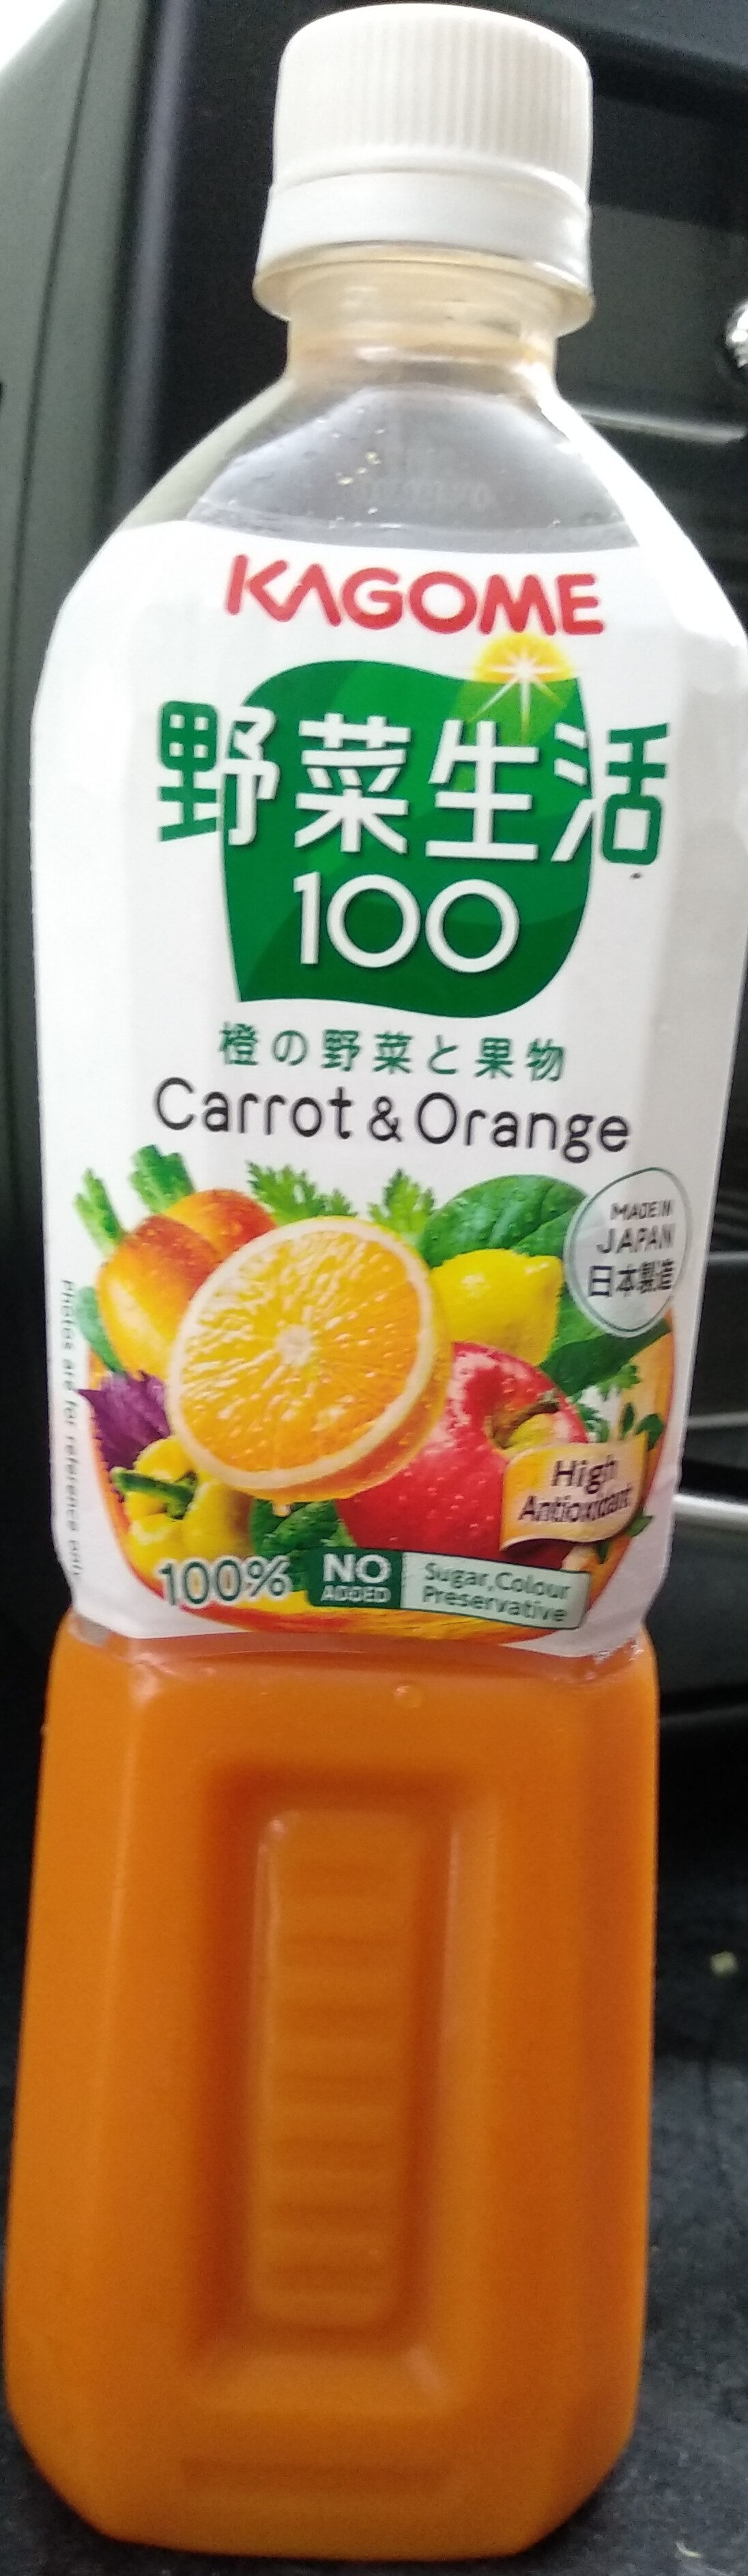 Carrot & Orange juice - Product